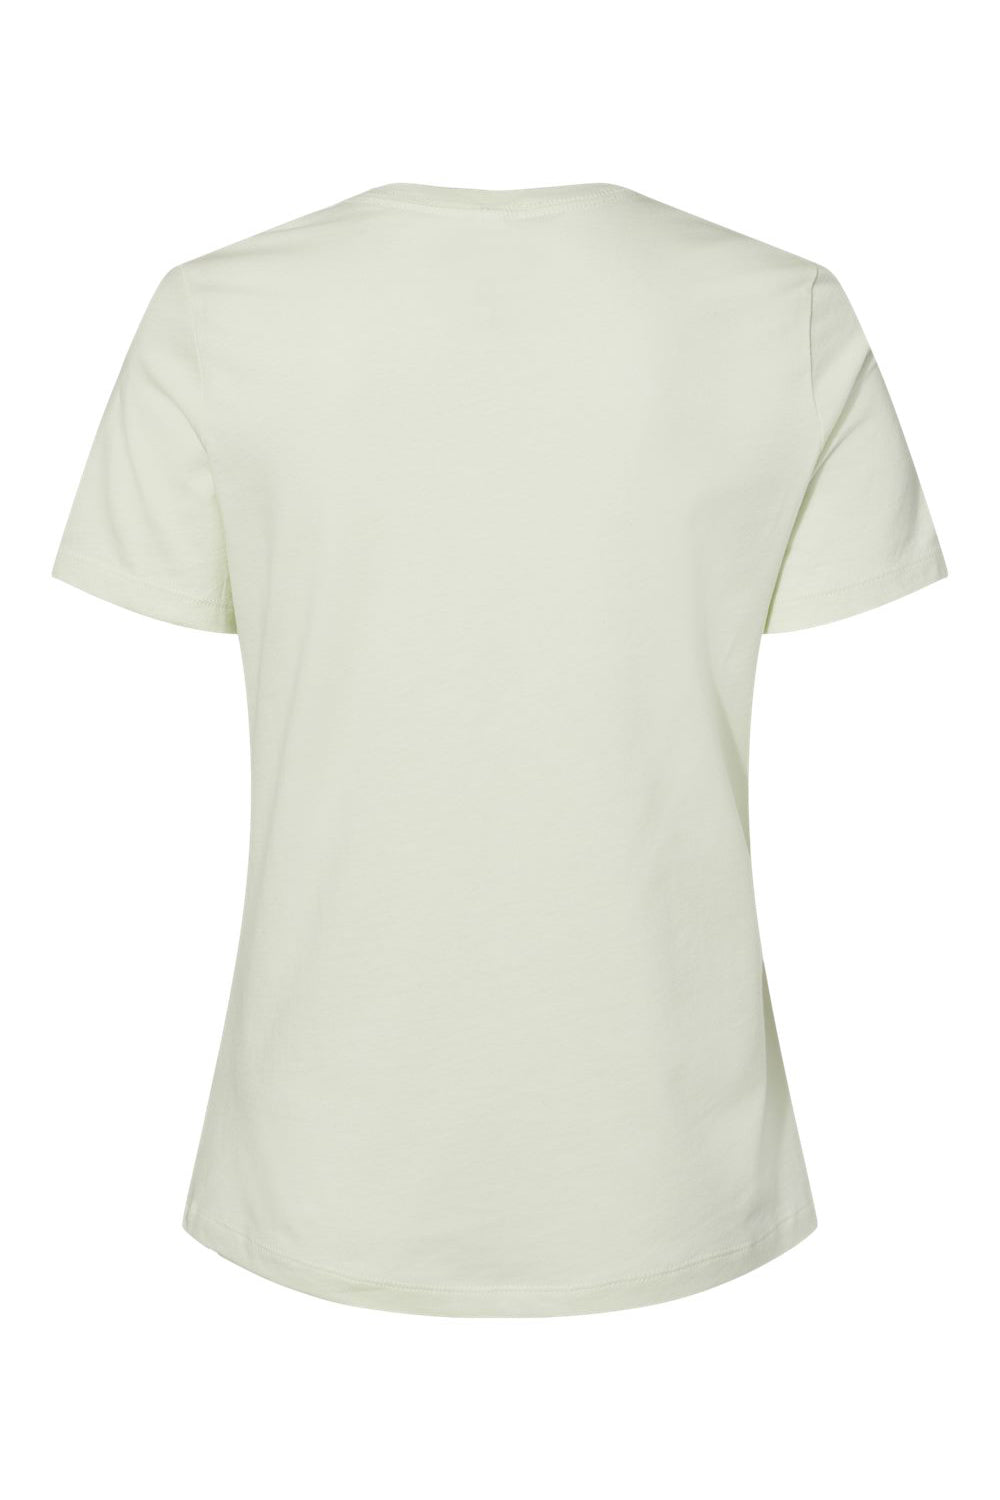 Bella + Canvas BC6400/B6400/6400 Womens Relaxed Jersey Short Sleeve Crewneck T-Shirt Citron Flat Back